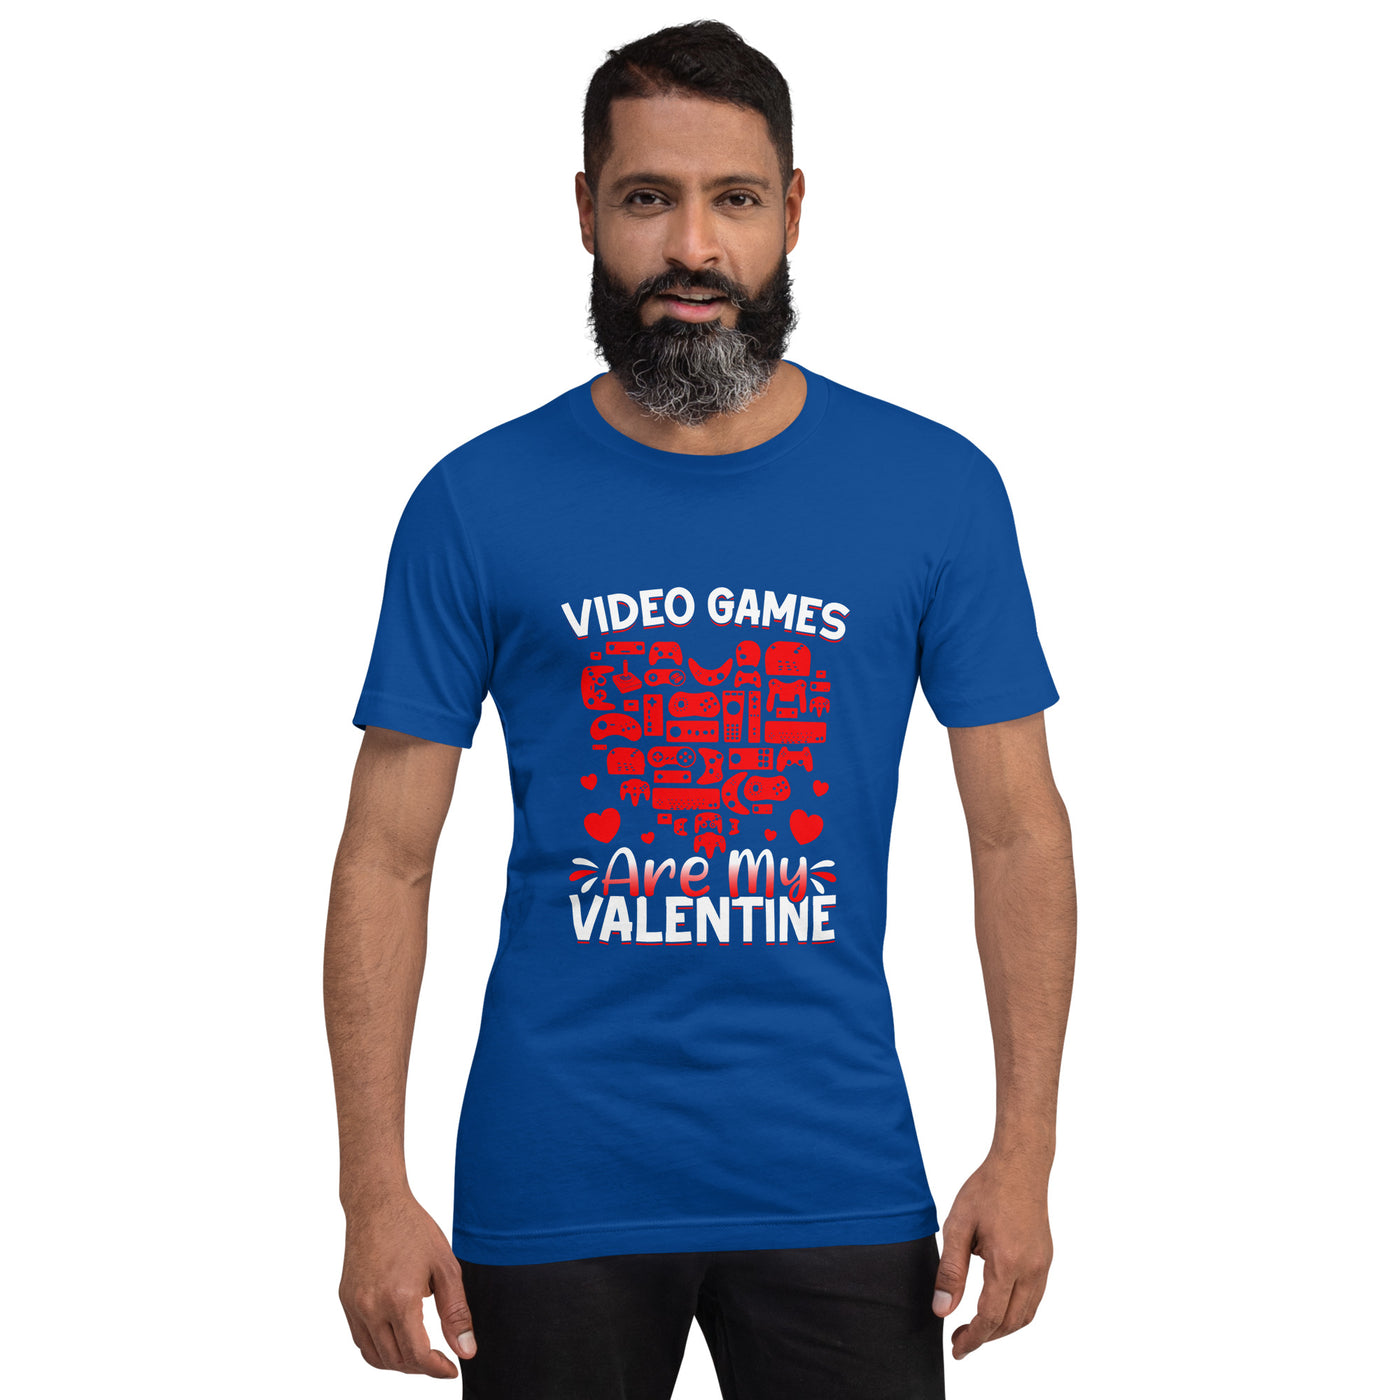 Video games are my valentine Unisex t-shirt